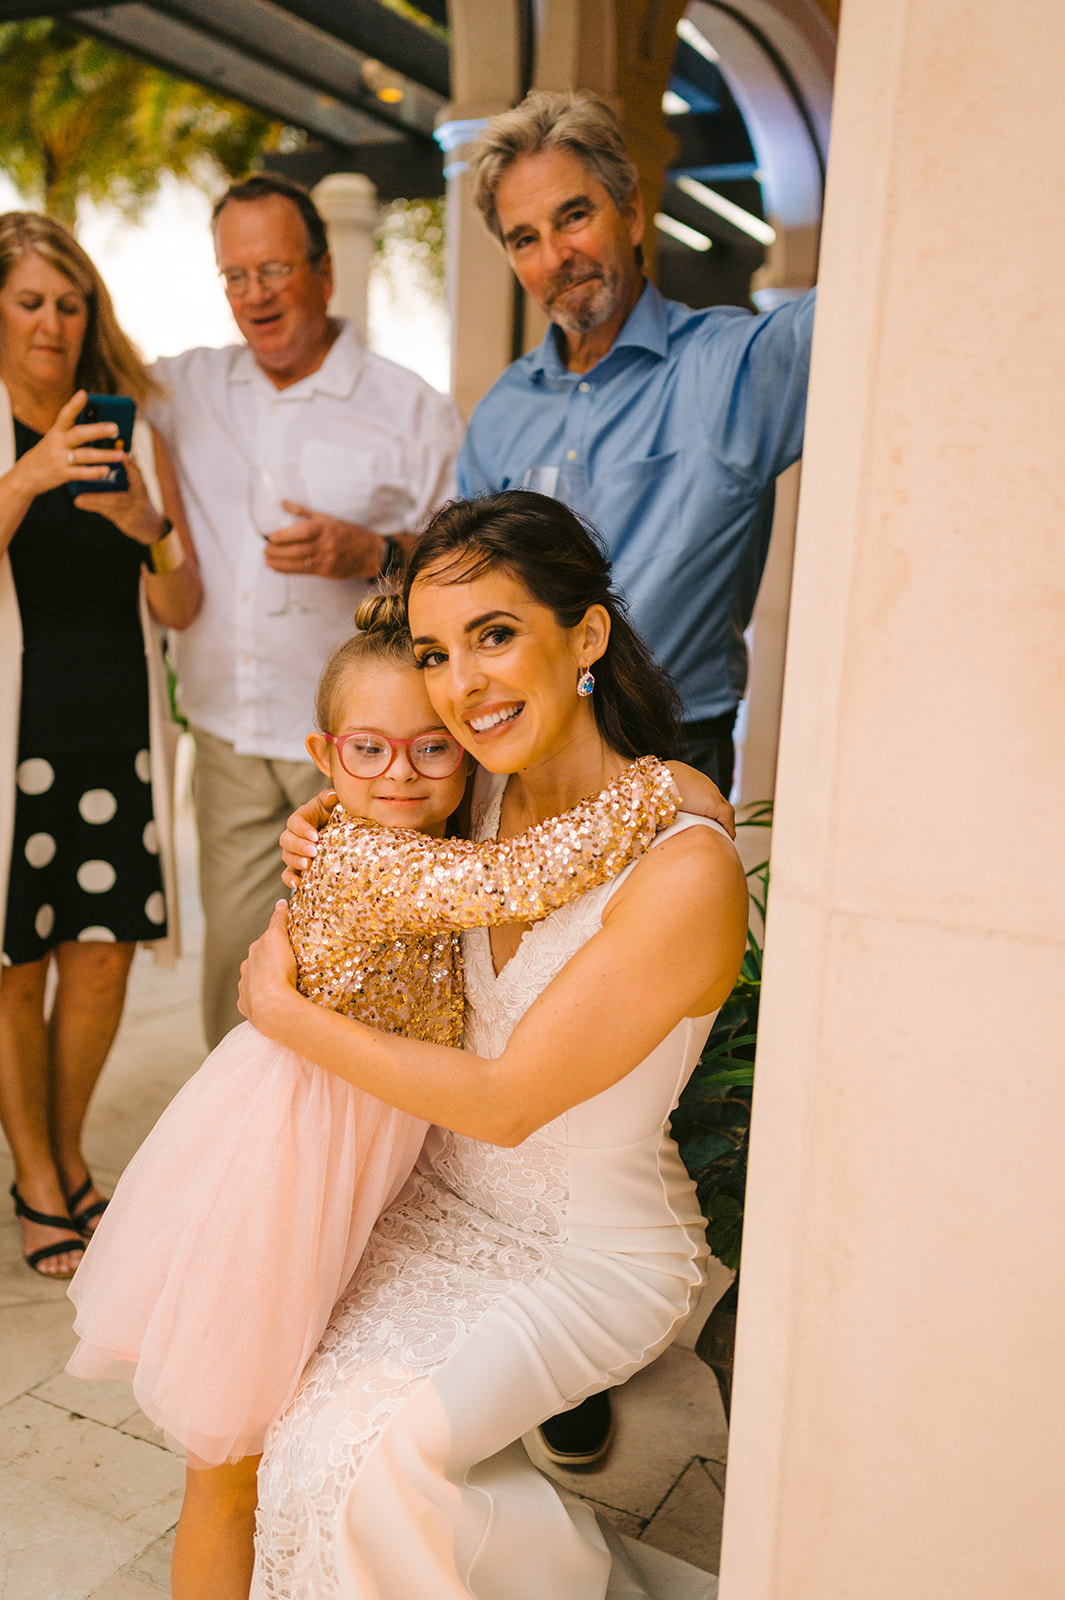 Naples Florida wedding photographer captures the unique and creative wedding favors
